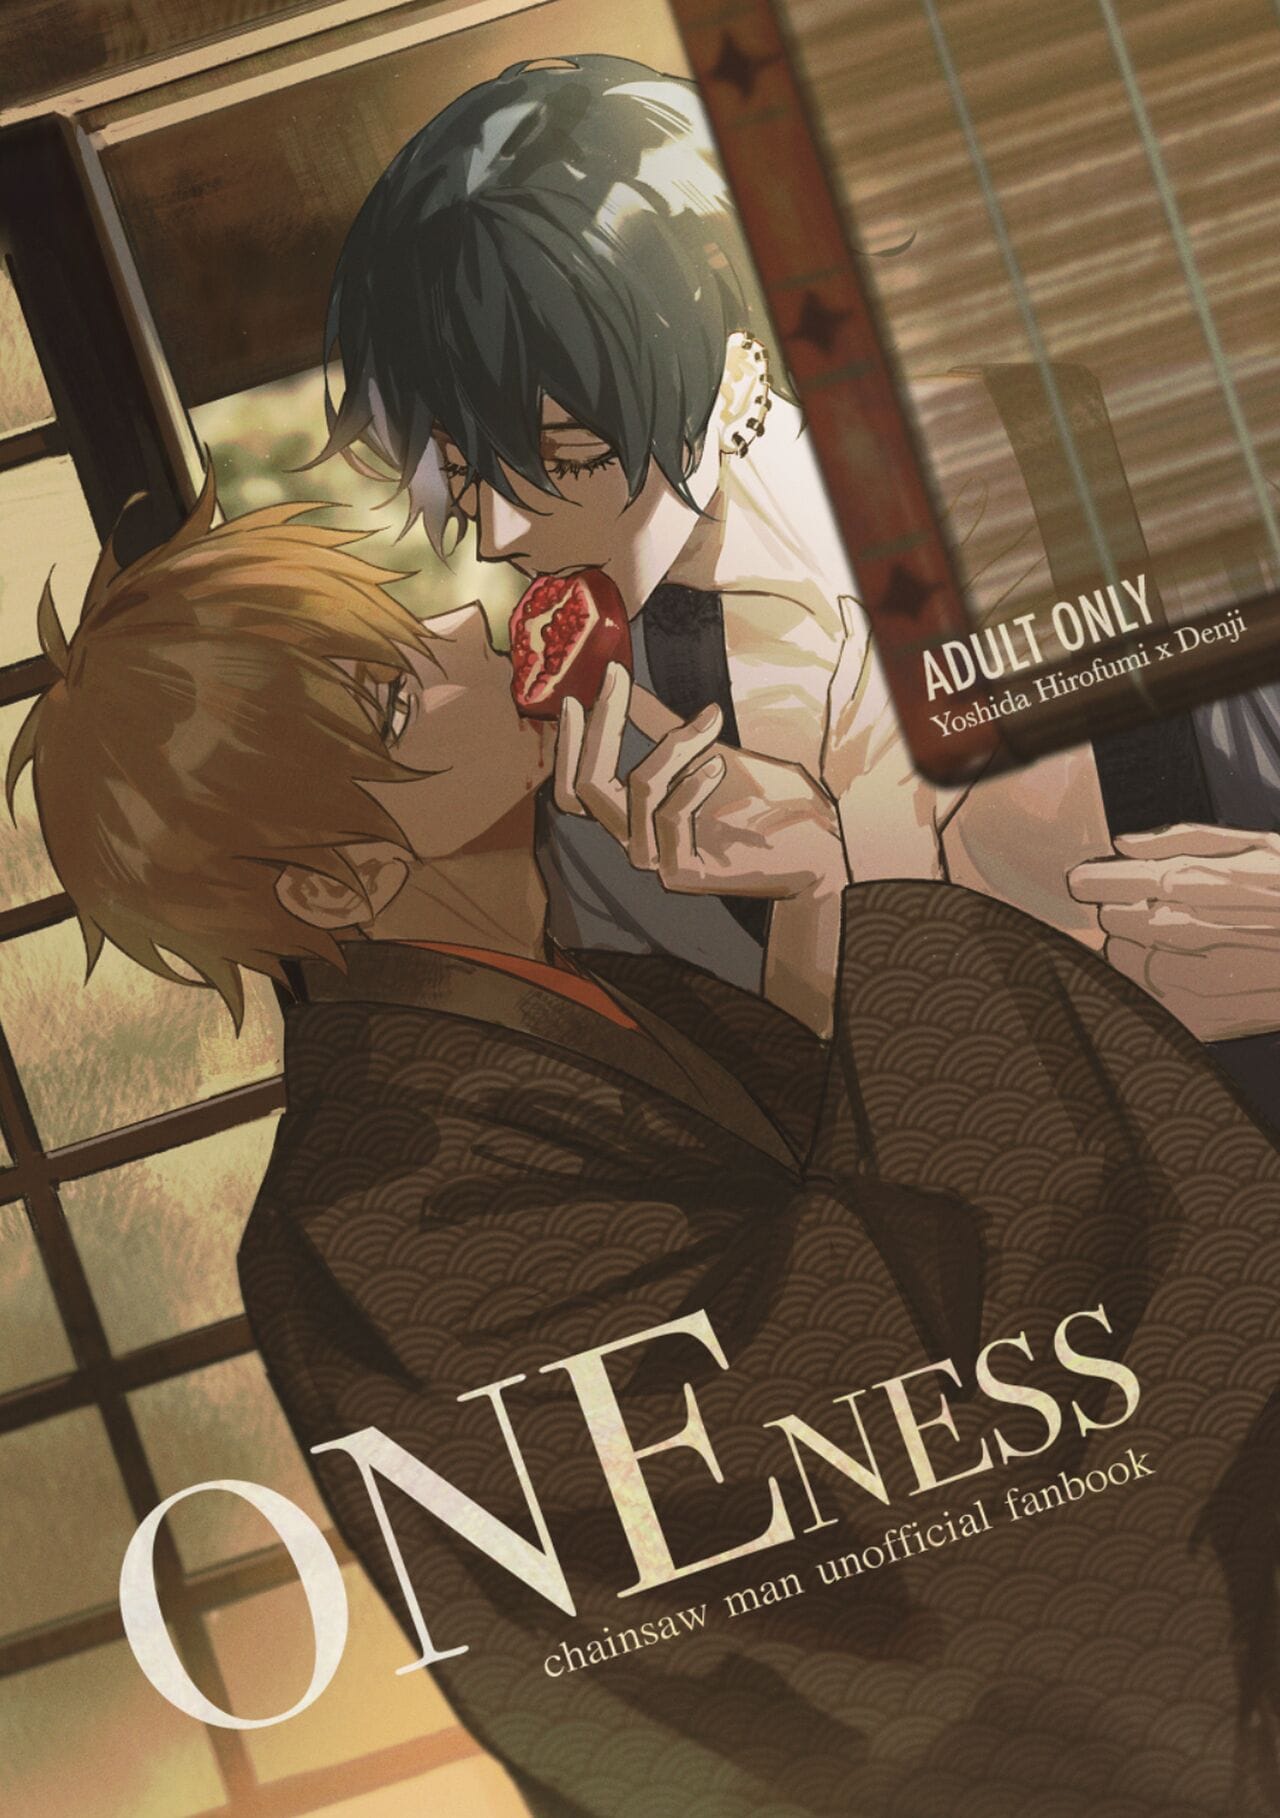 {Gajyago} Oneness [Edition Version]